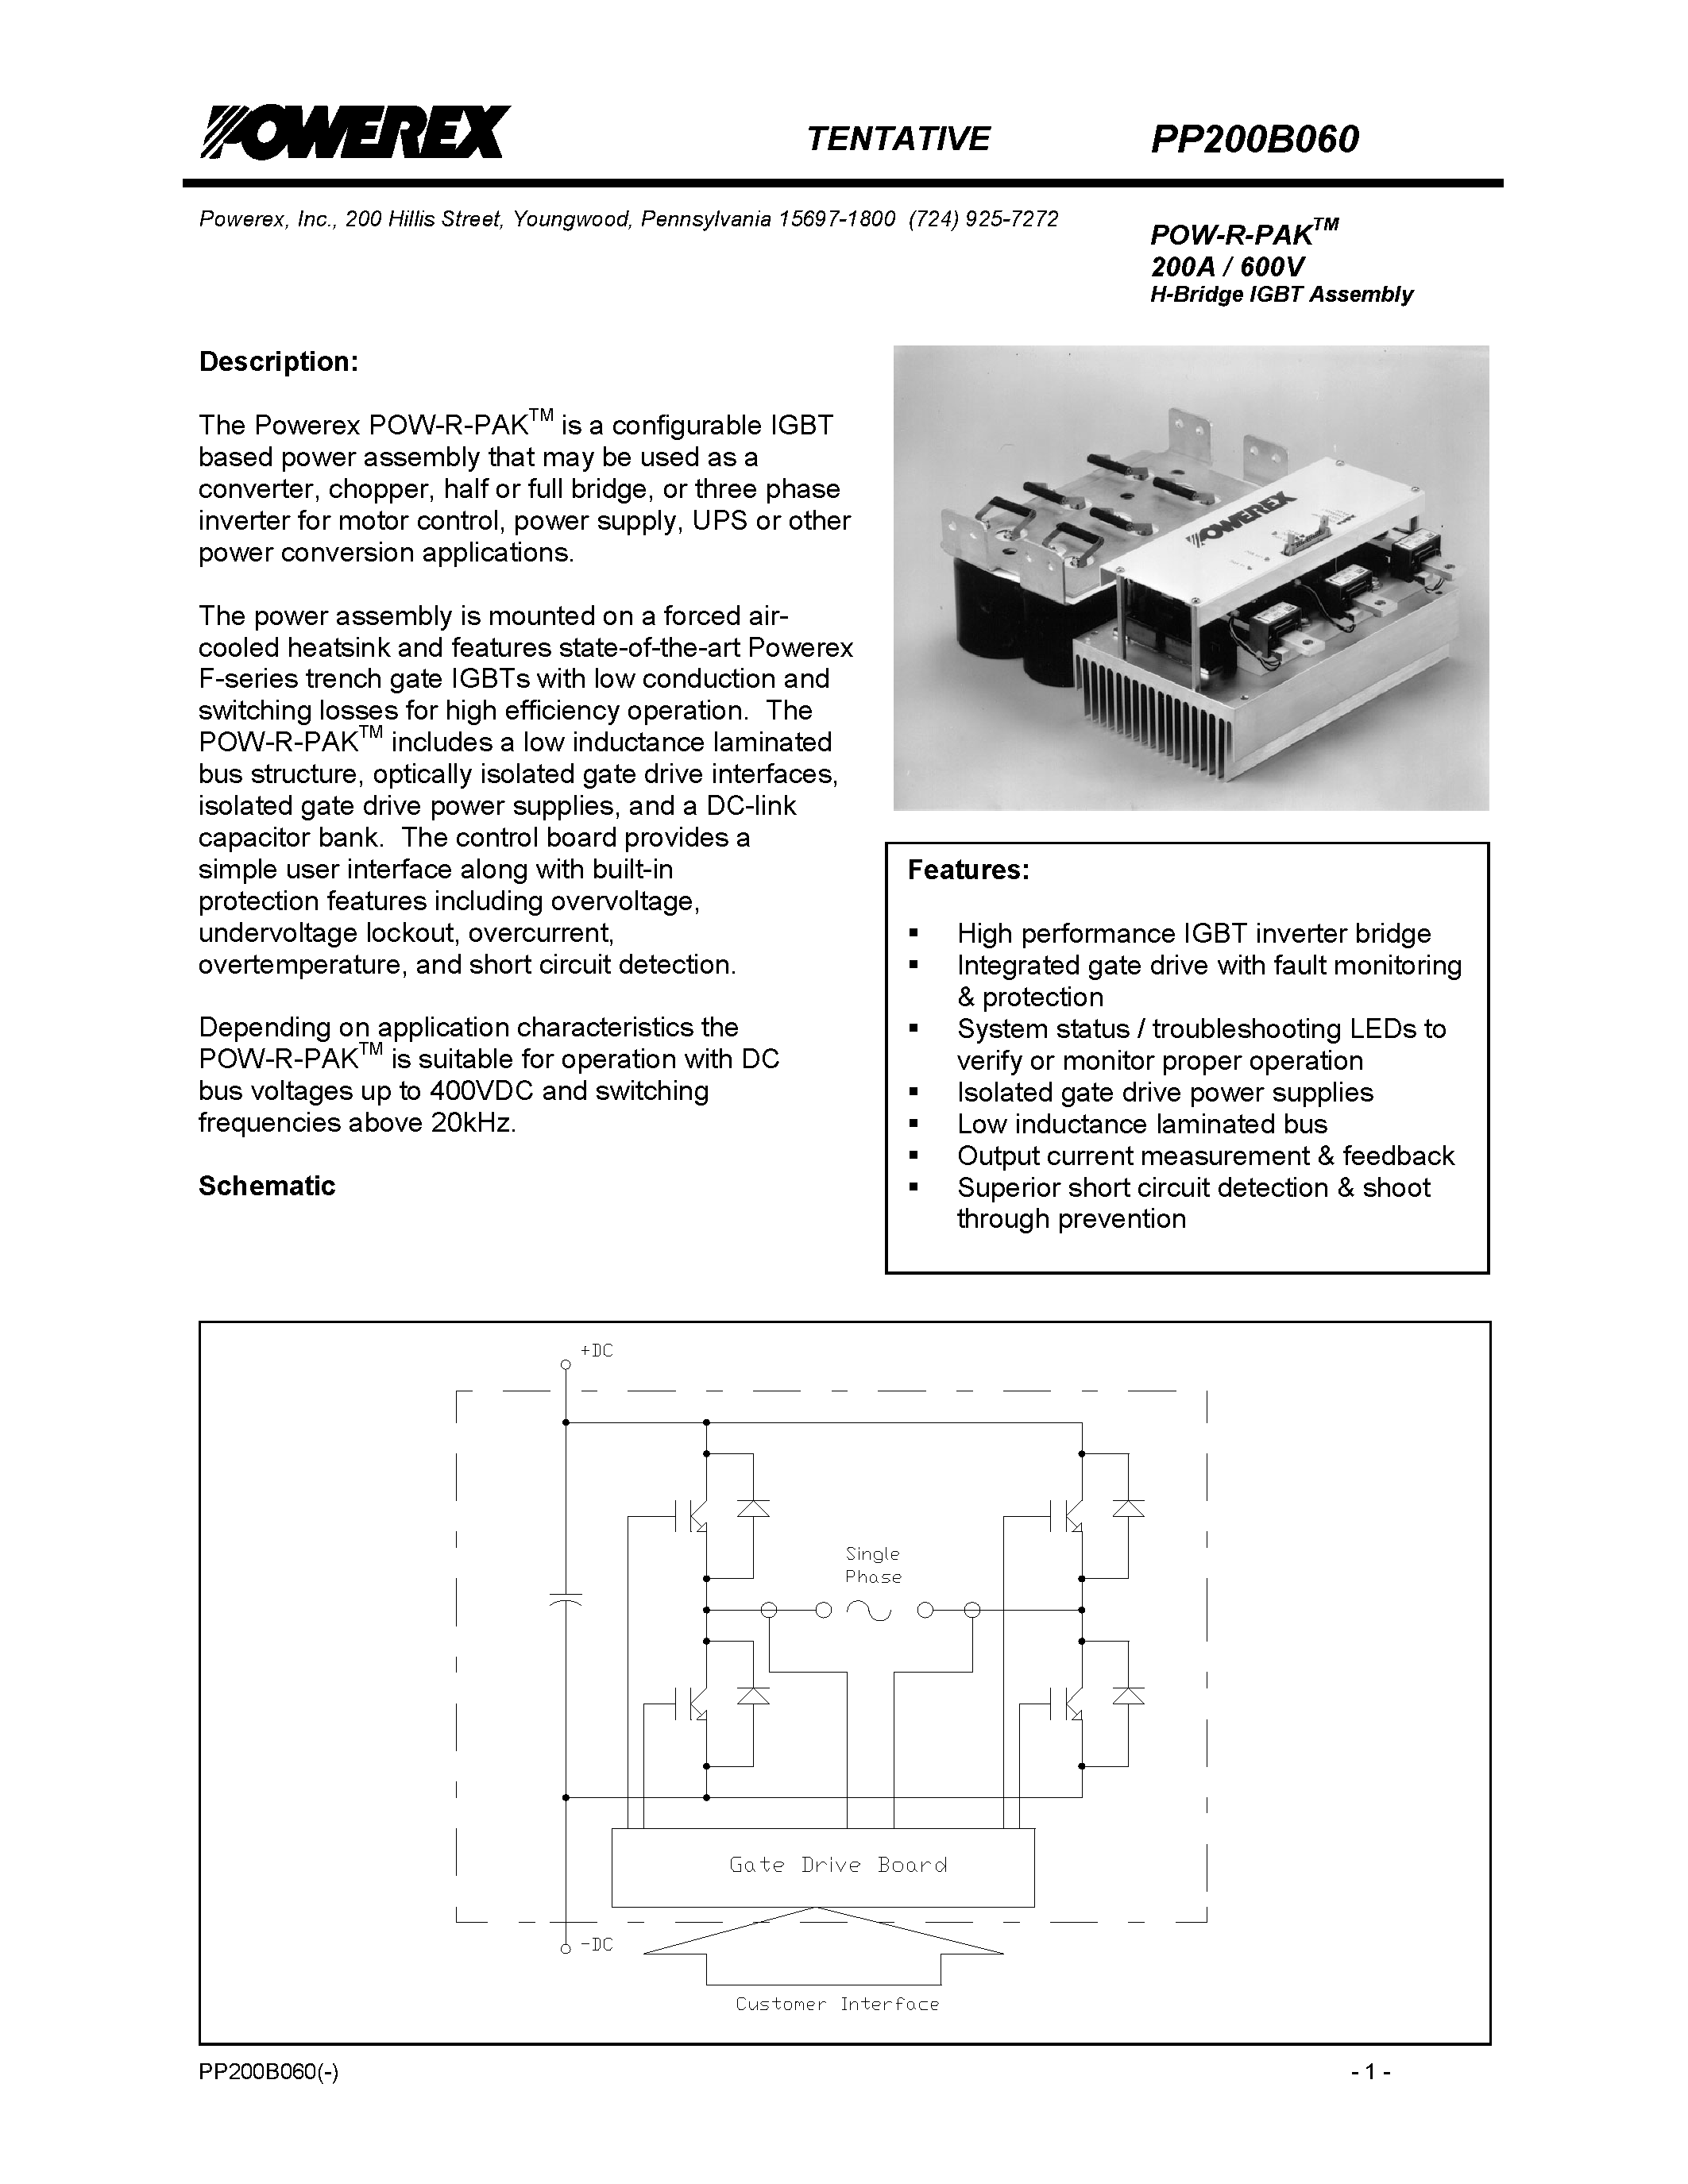 Datasheet PP200B060 - POW-R-PAK 200A / 600V H-Bridge IGBT Assembly page 1